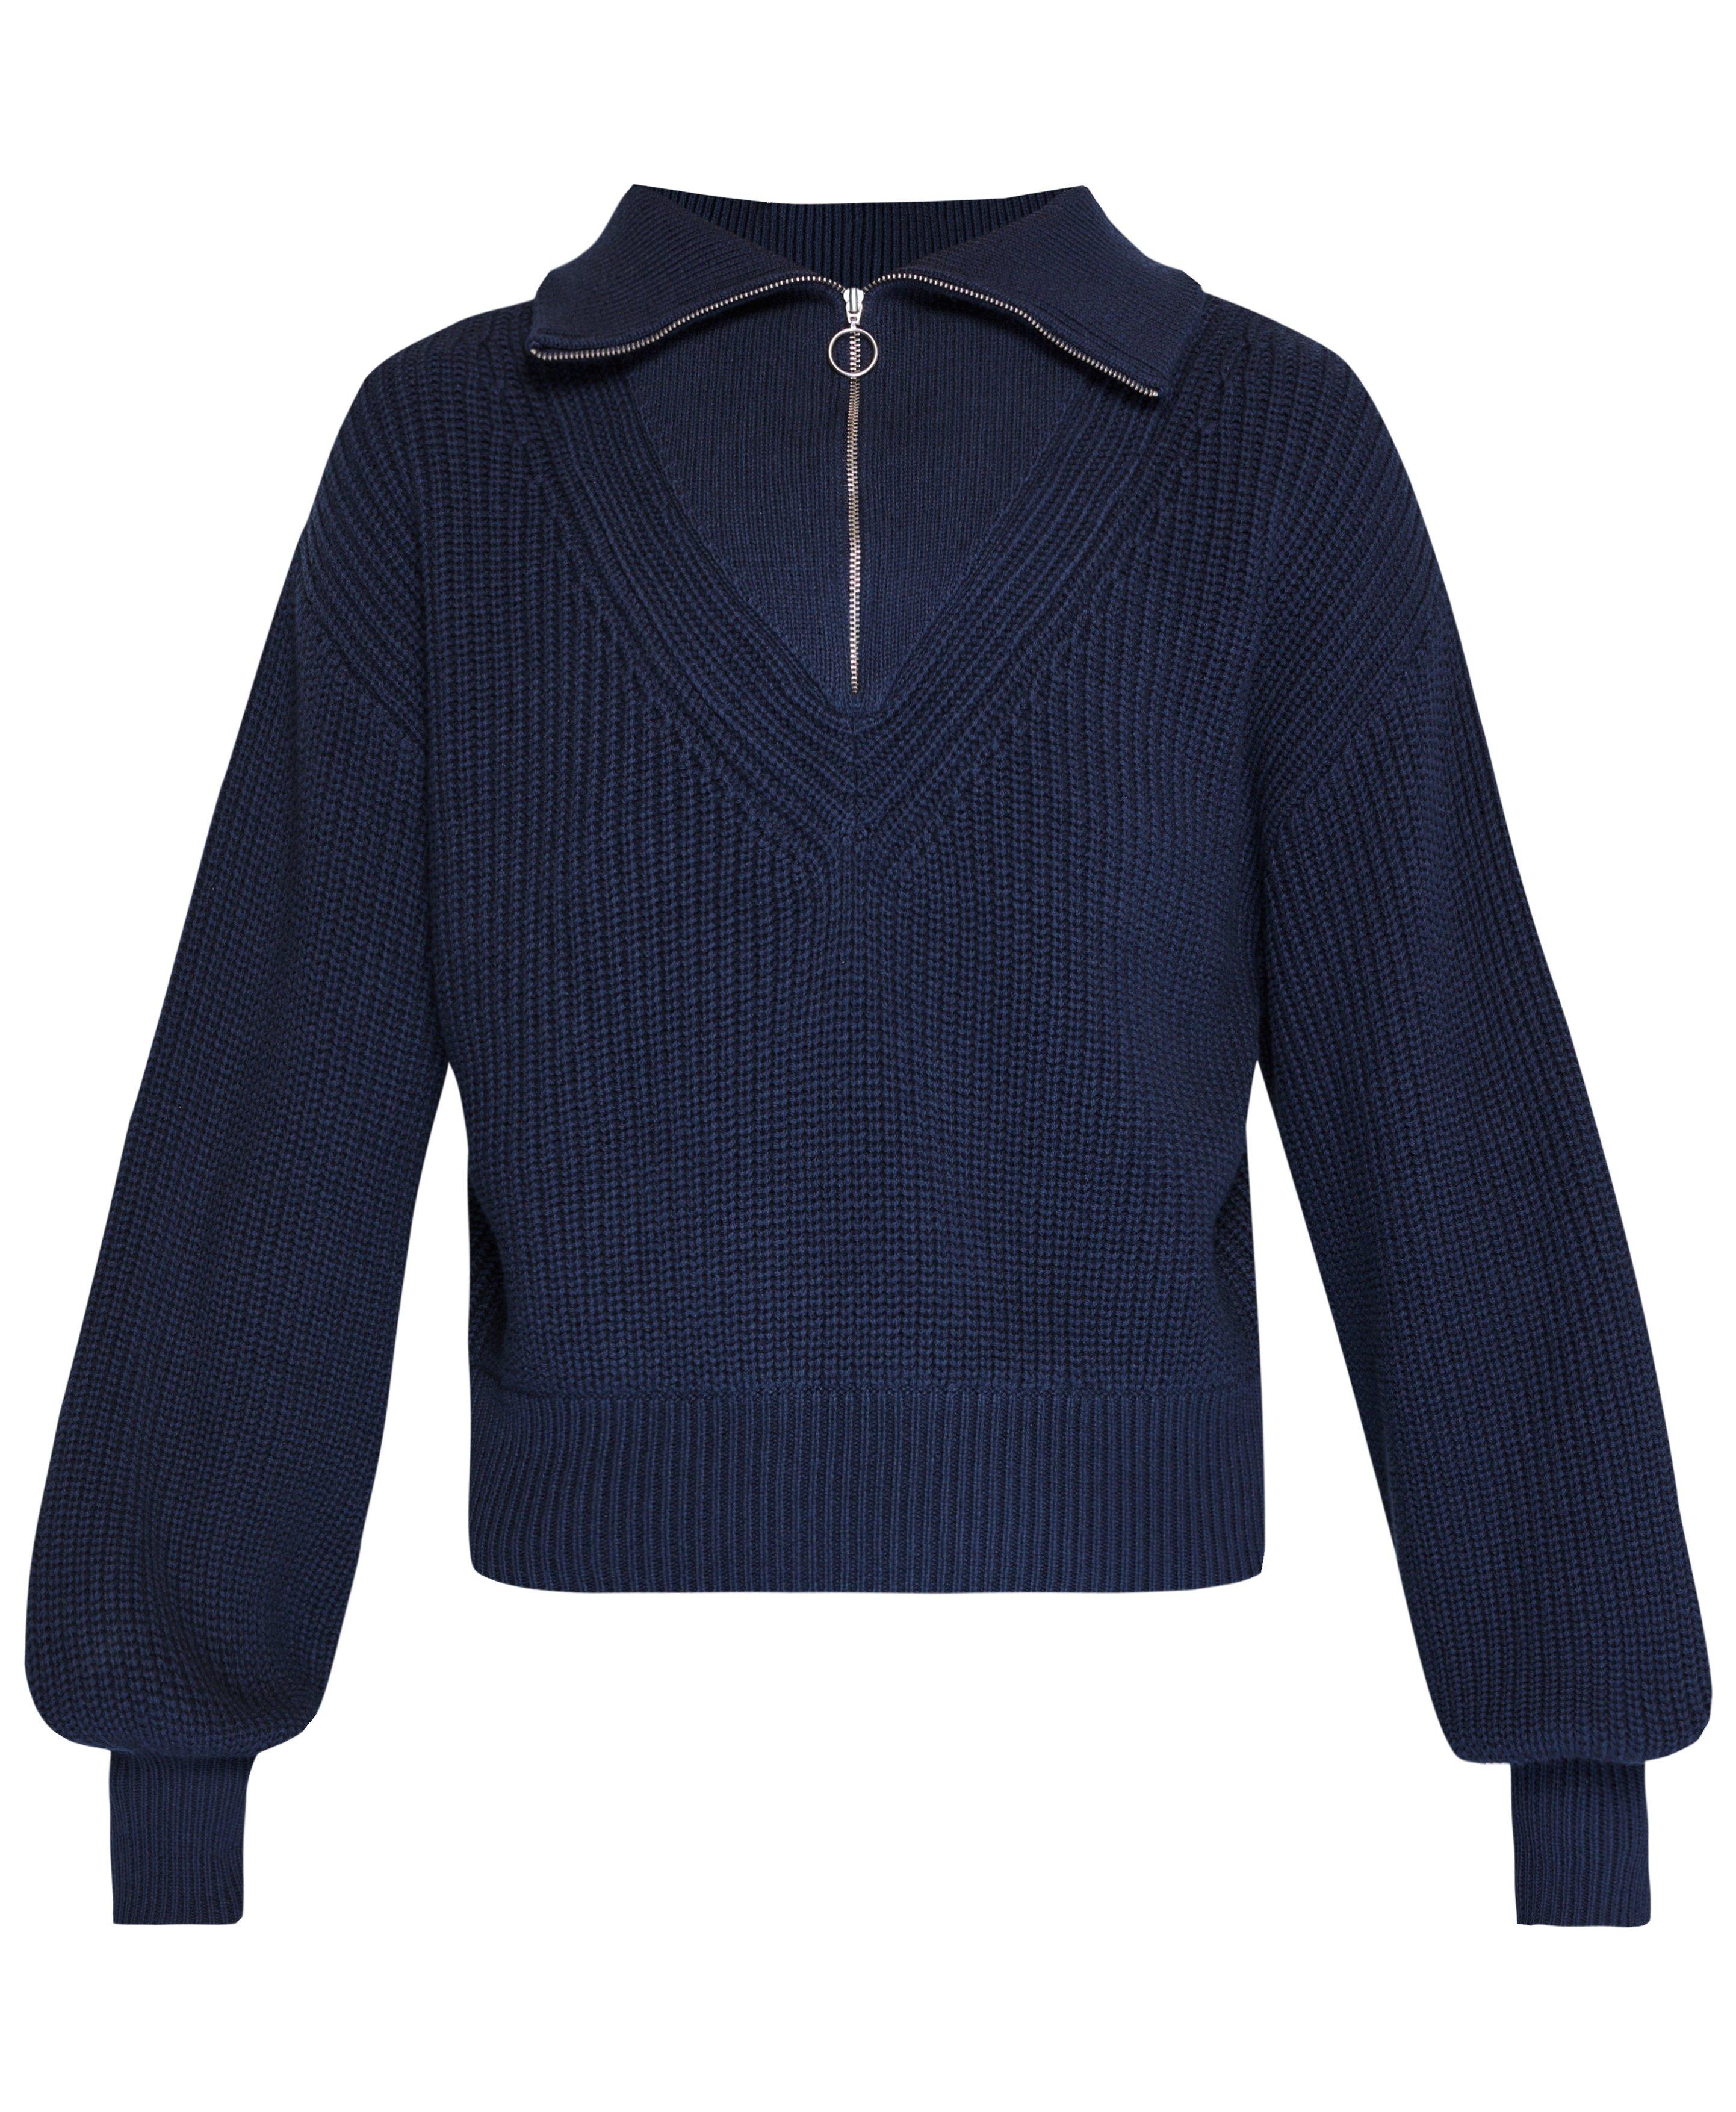 Modern Collared Knitted Sweater - Navy Blue | Sweaty Betty